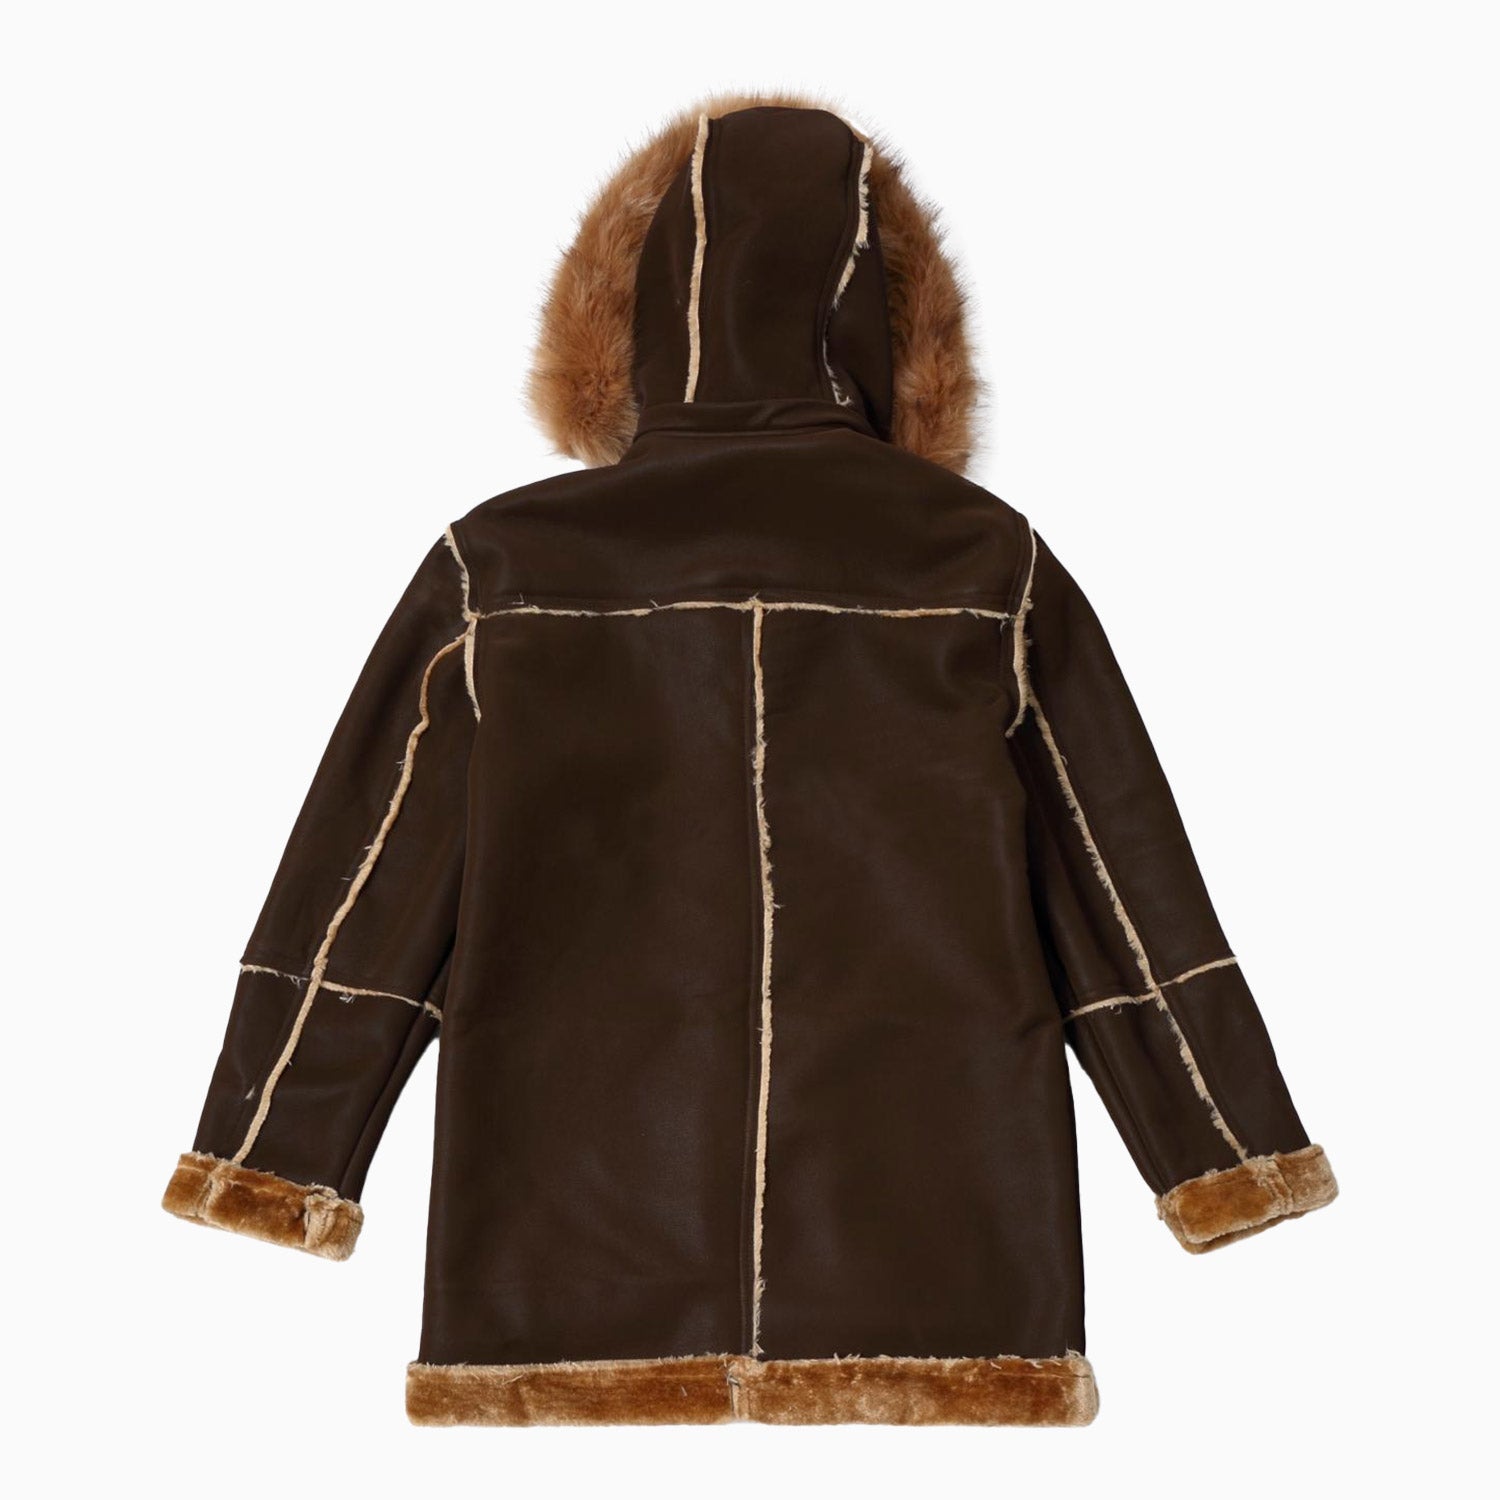 hudson-outerwear-mens-long-shearling-coat-jacket-h6052560-brn